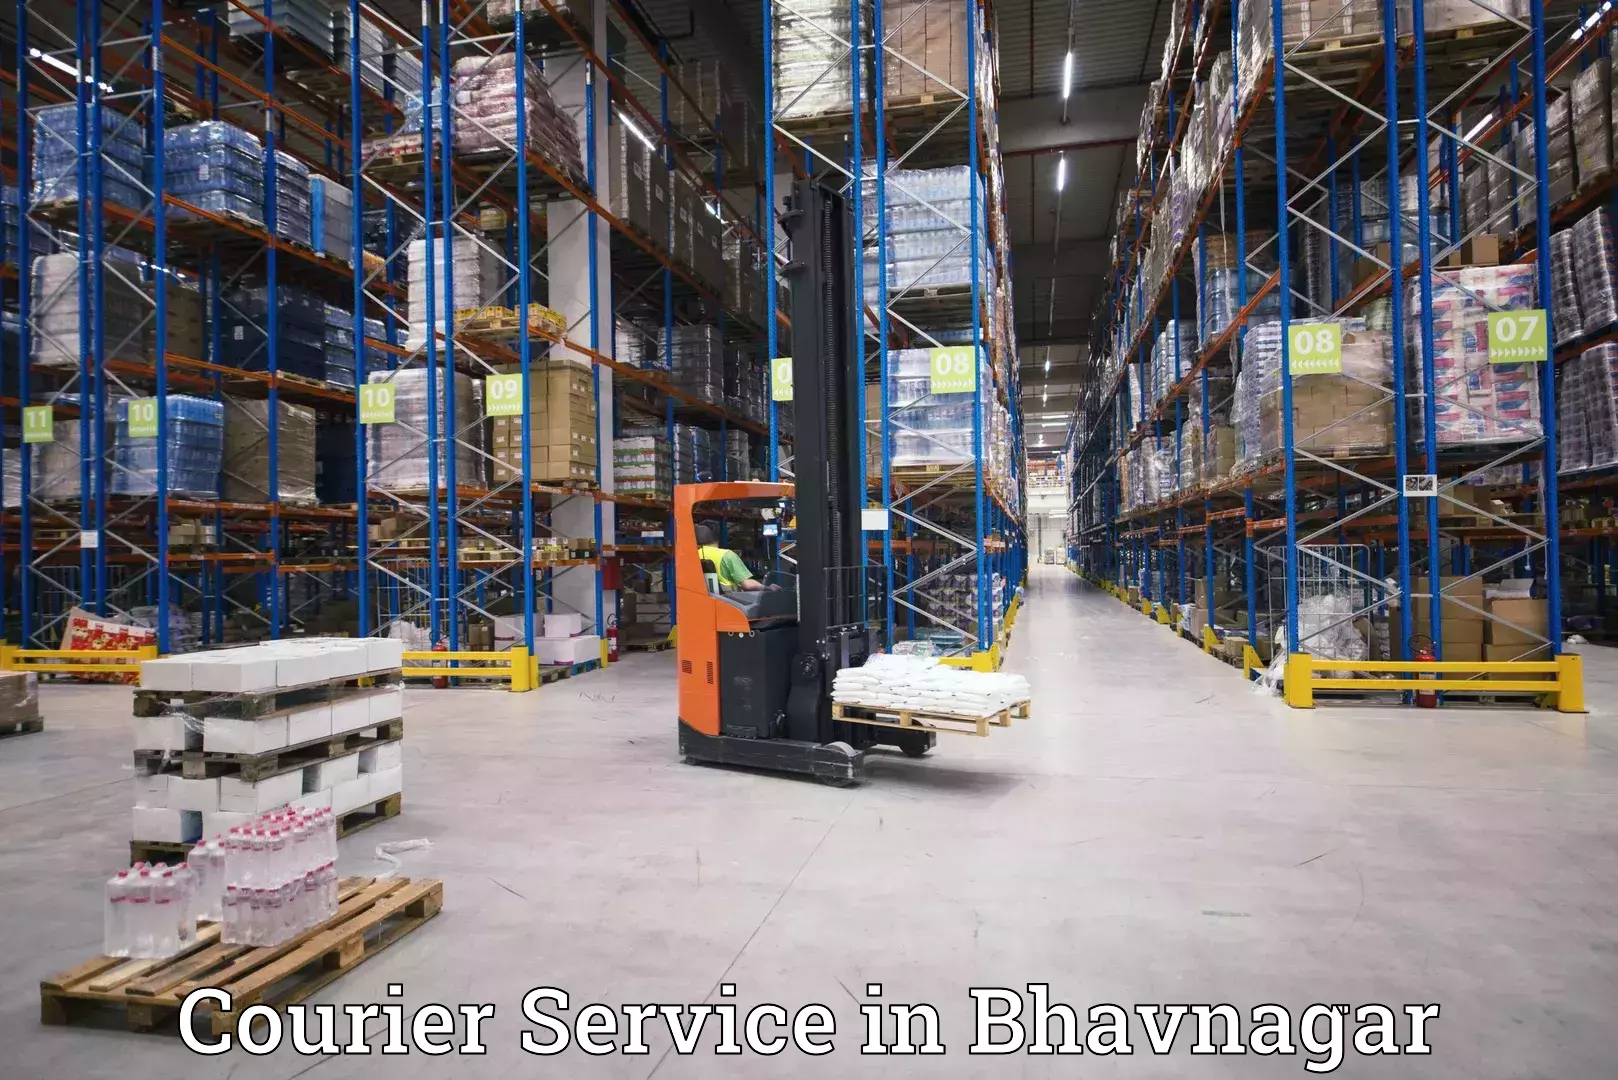 Express courier facilities in Bhavnagar